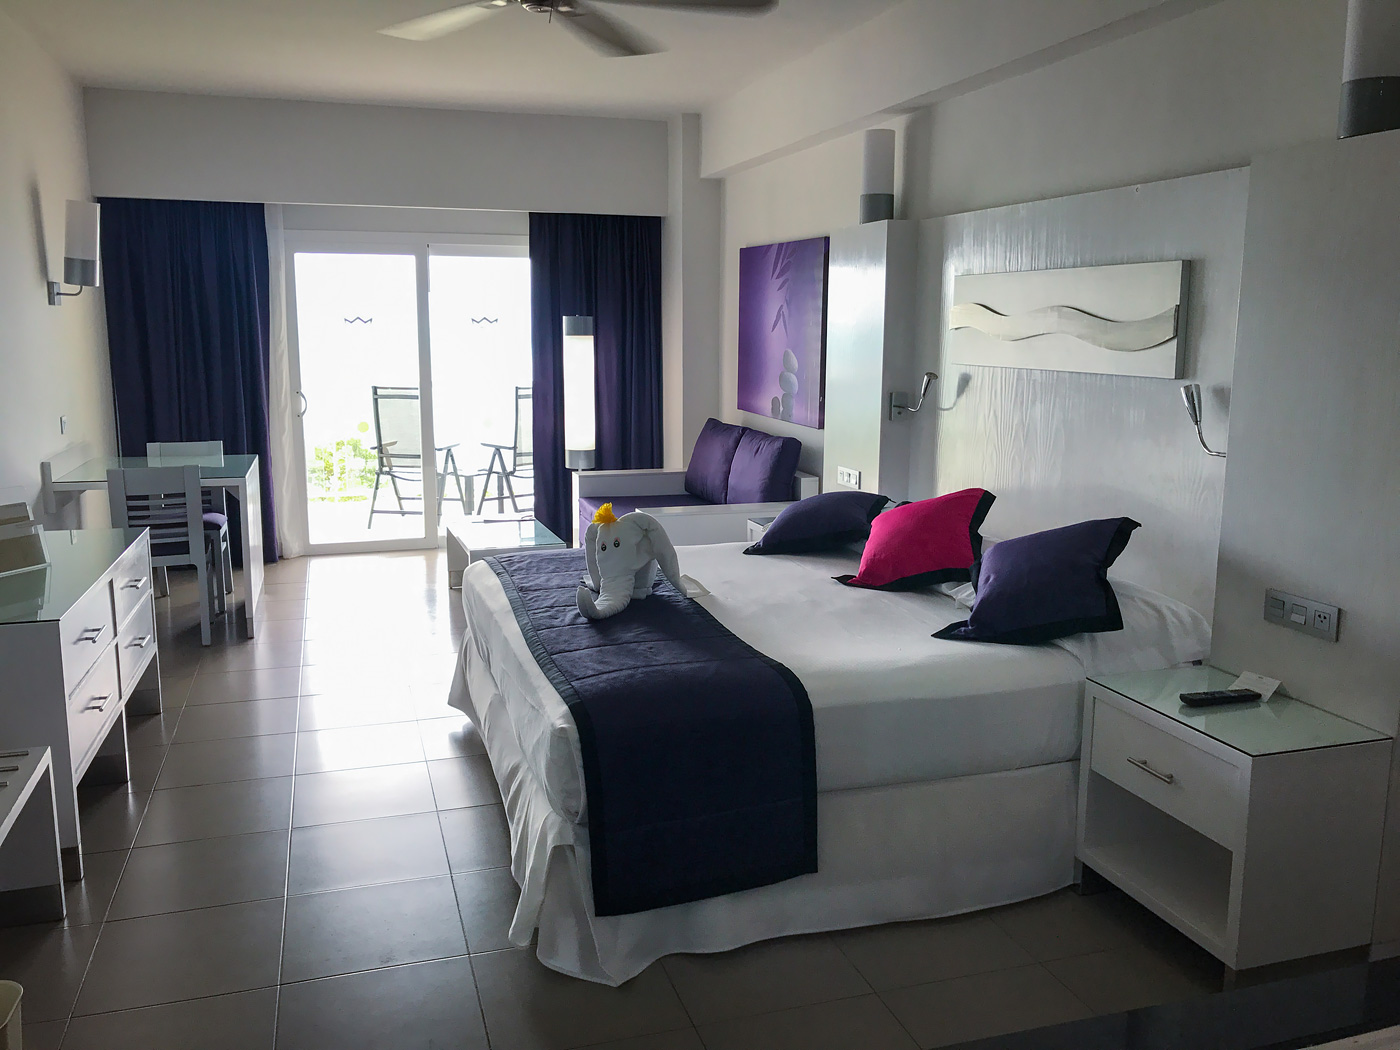 Hotel Riu Palace Peninsula - Cancun Resort Travel